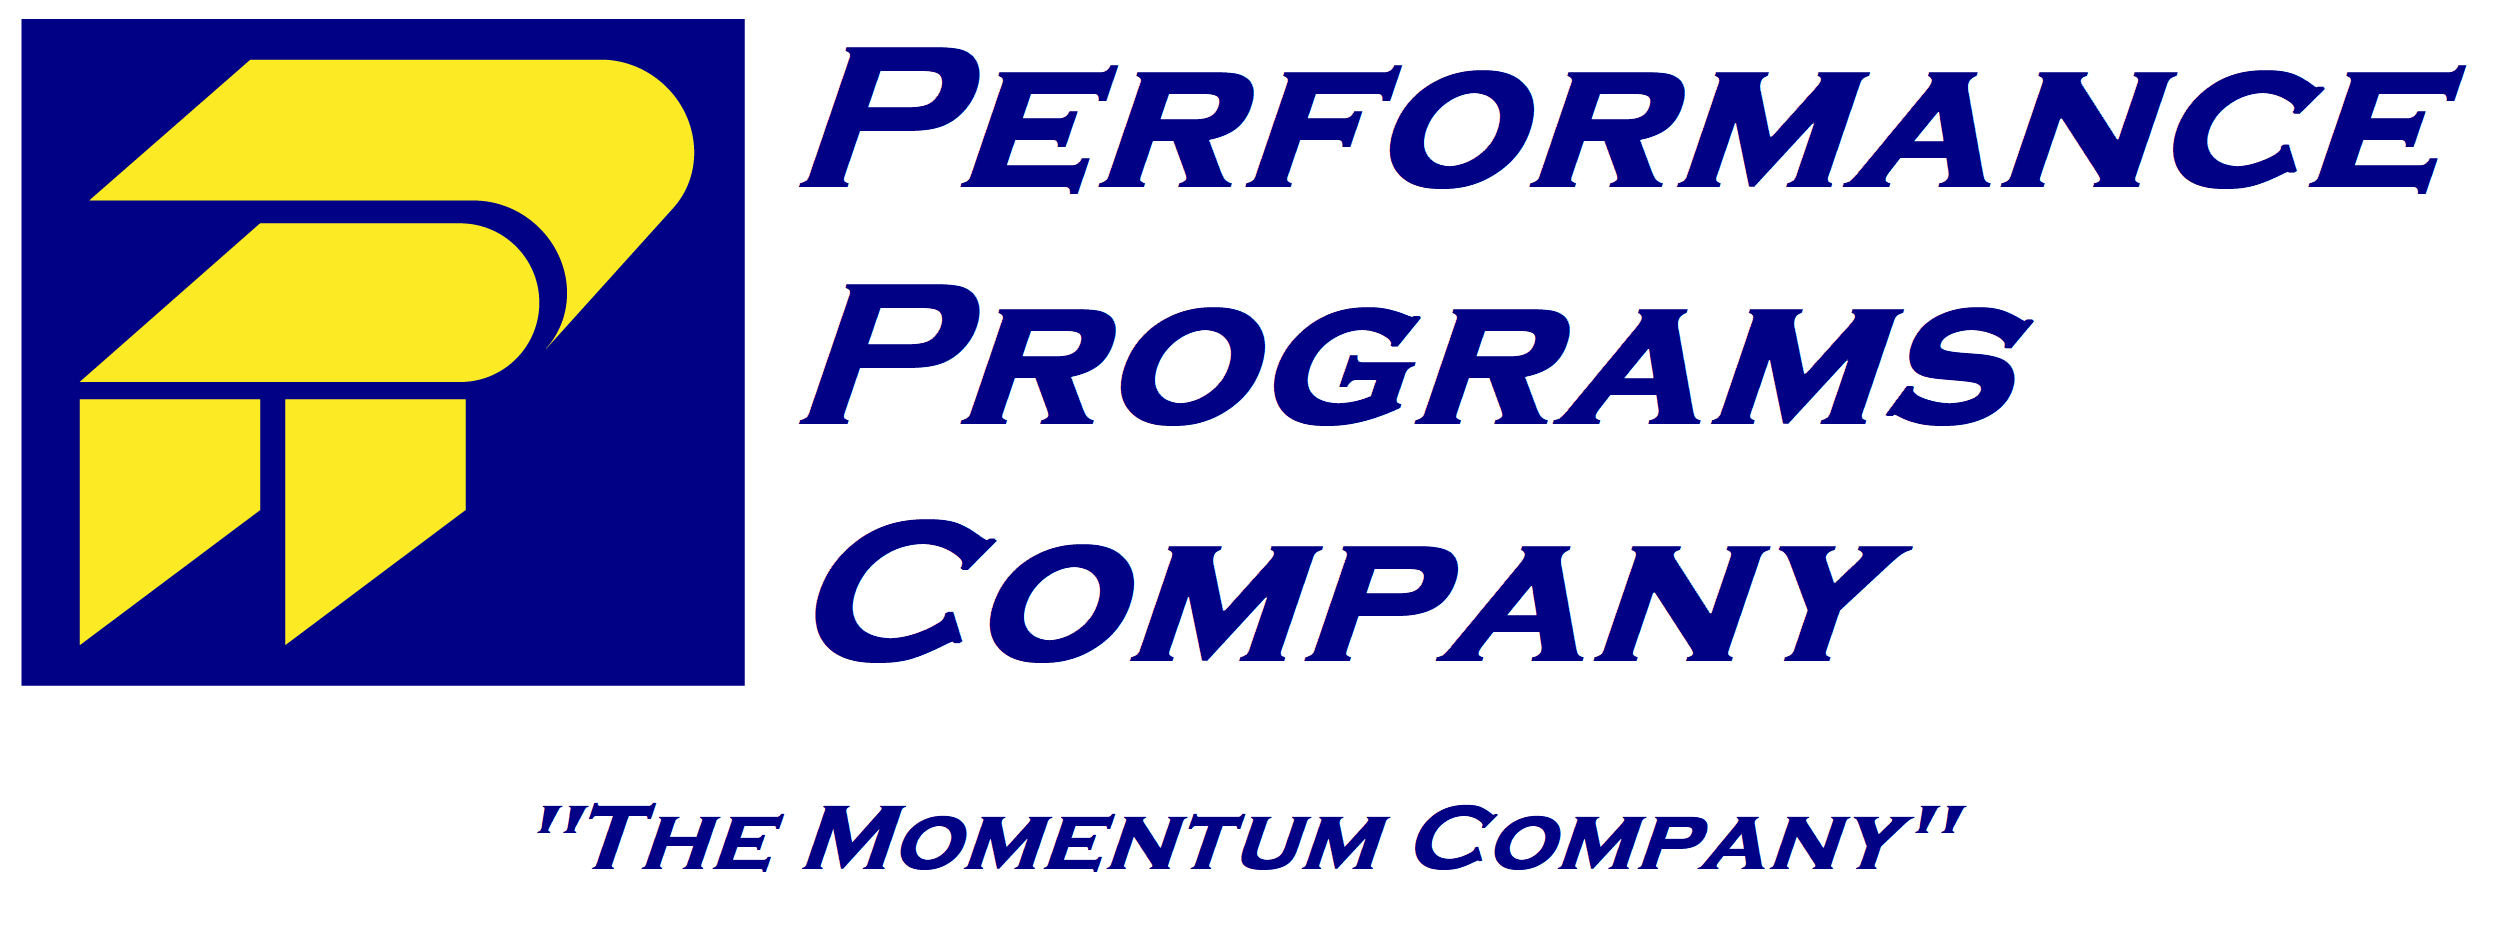 PPC alternate logo 2-8-19